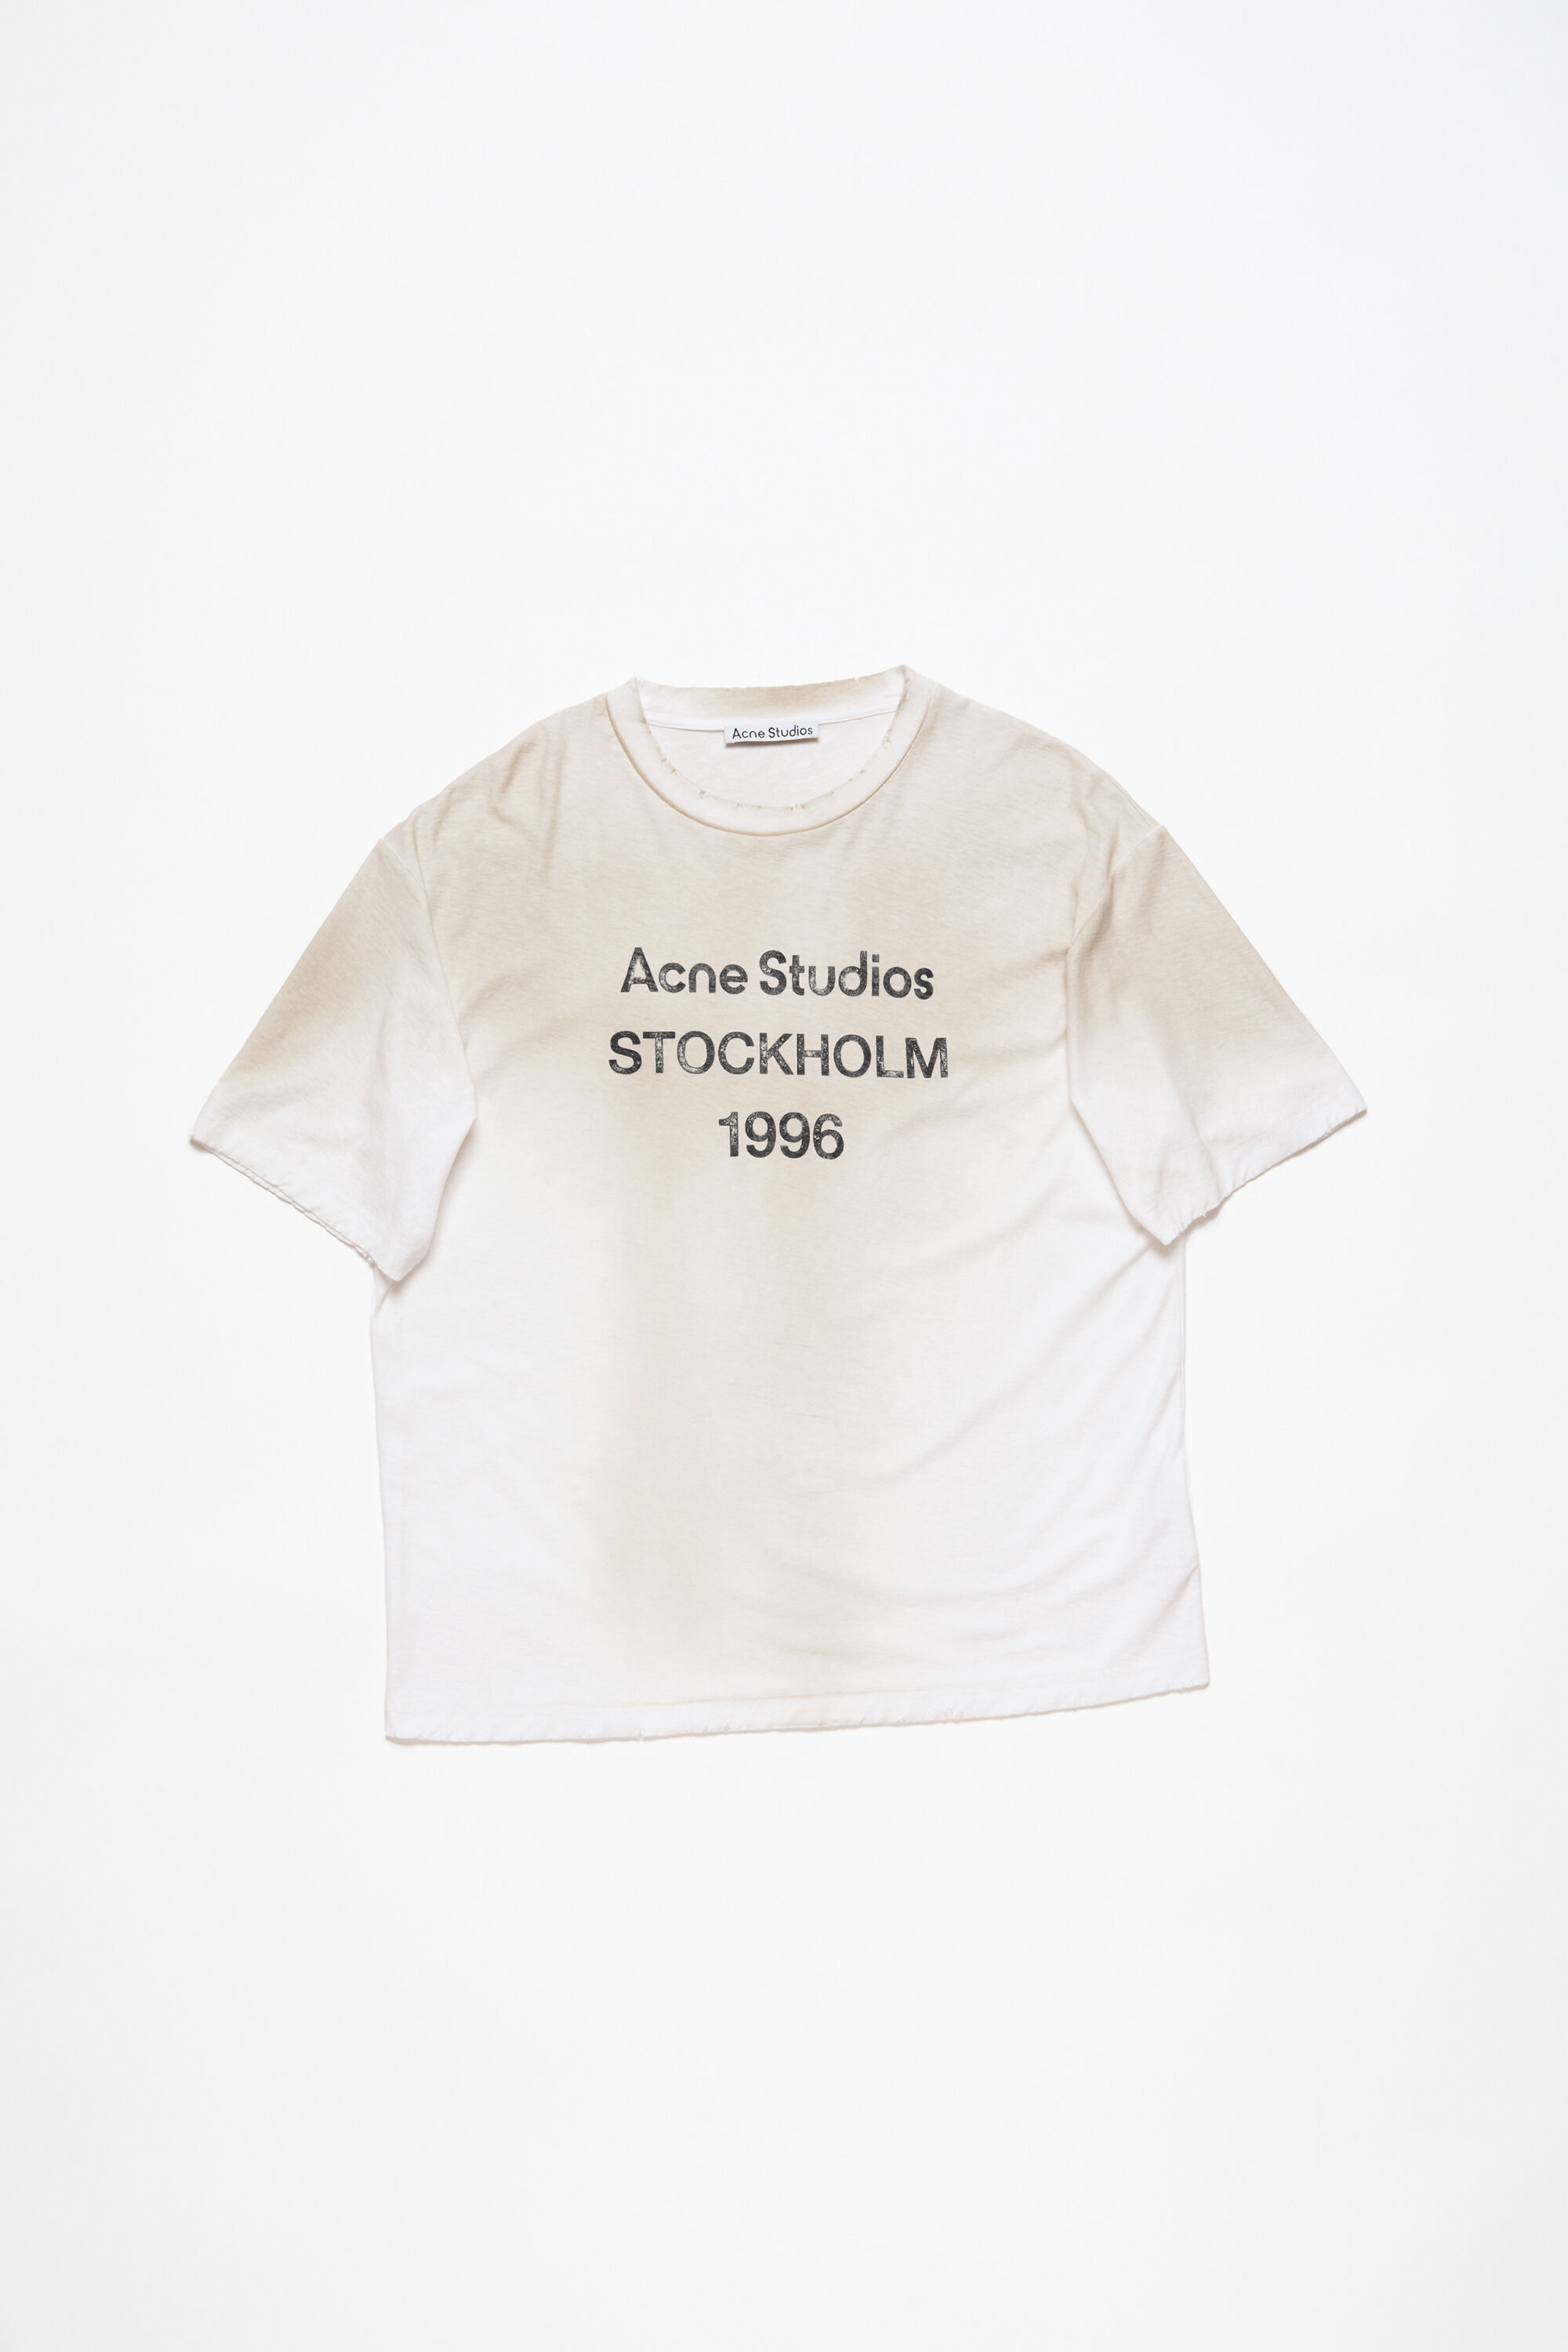 Acne Studios - ロゴTシャツ - リラックスフィット - フェイデッドブラック